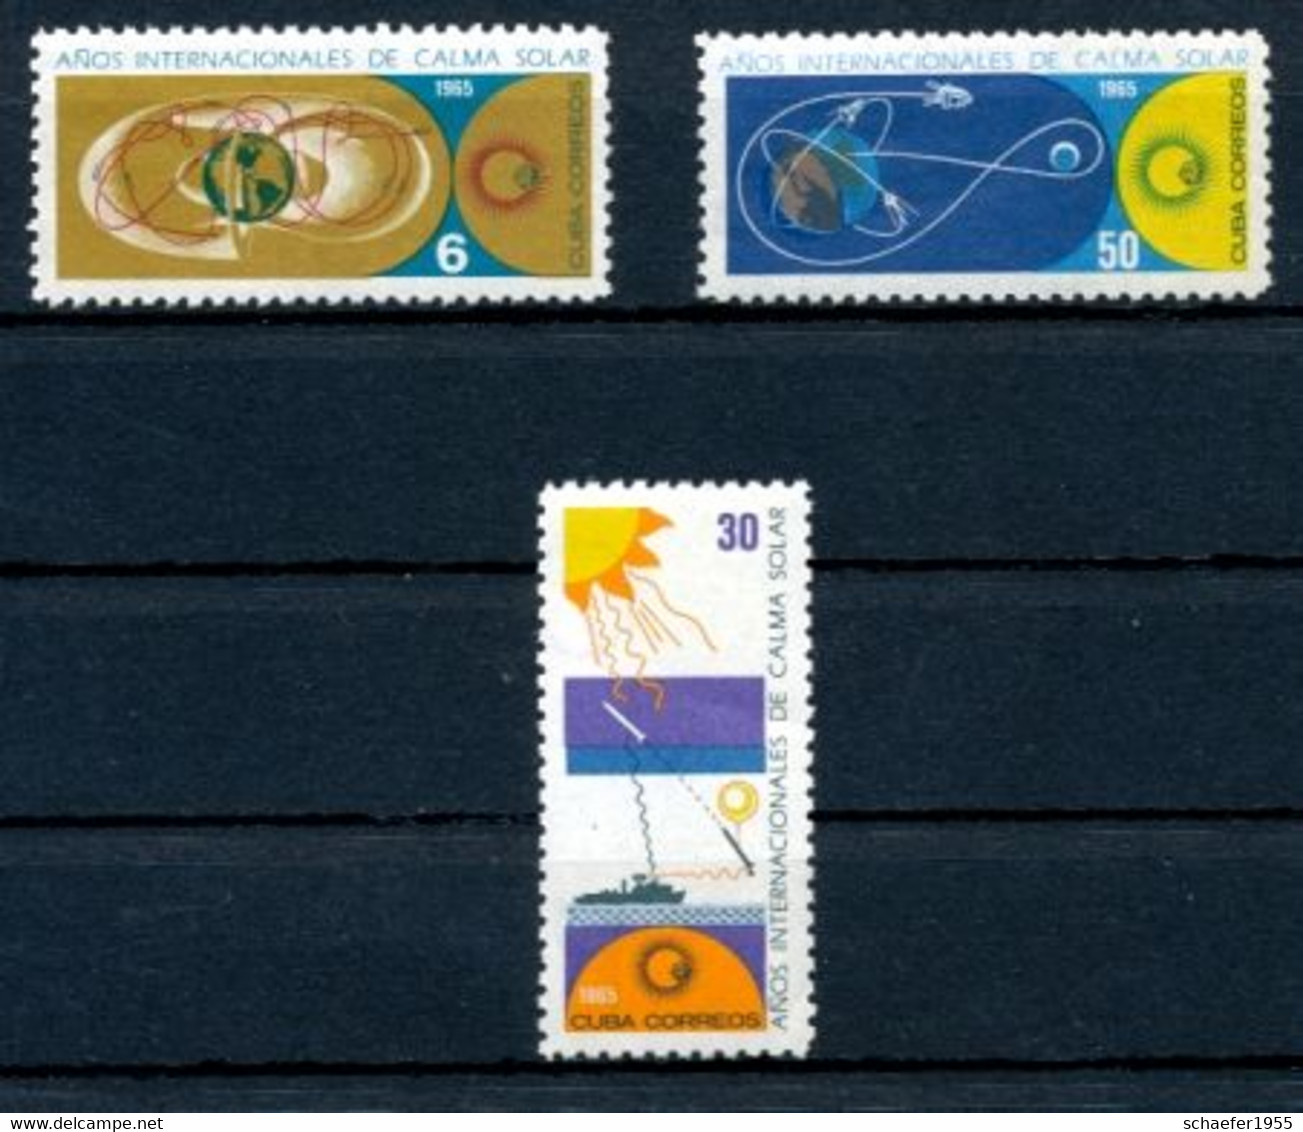 Cuba, Kuba 1965 Calma Solar 2x FDC + Stamps - Amérique Du Nord